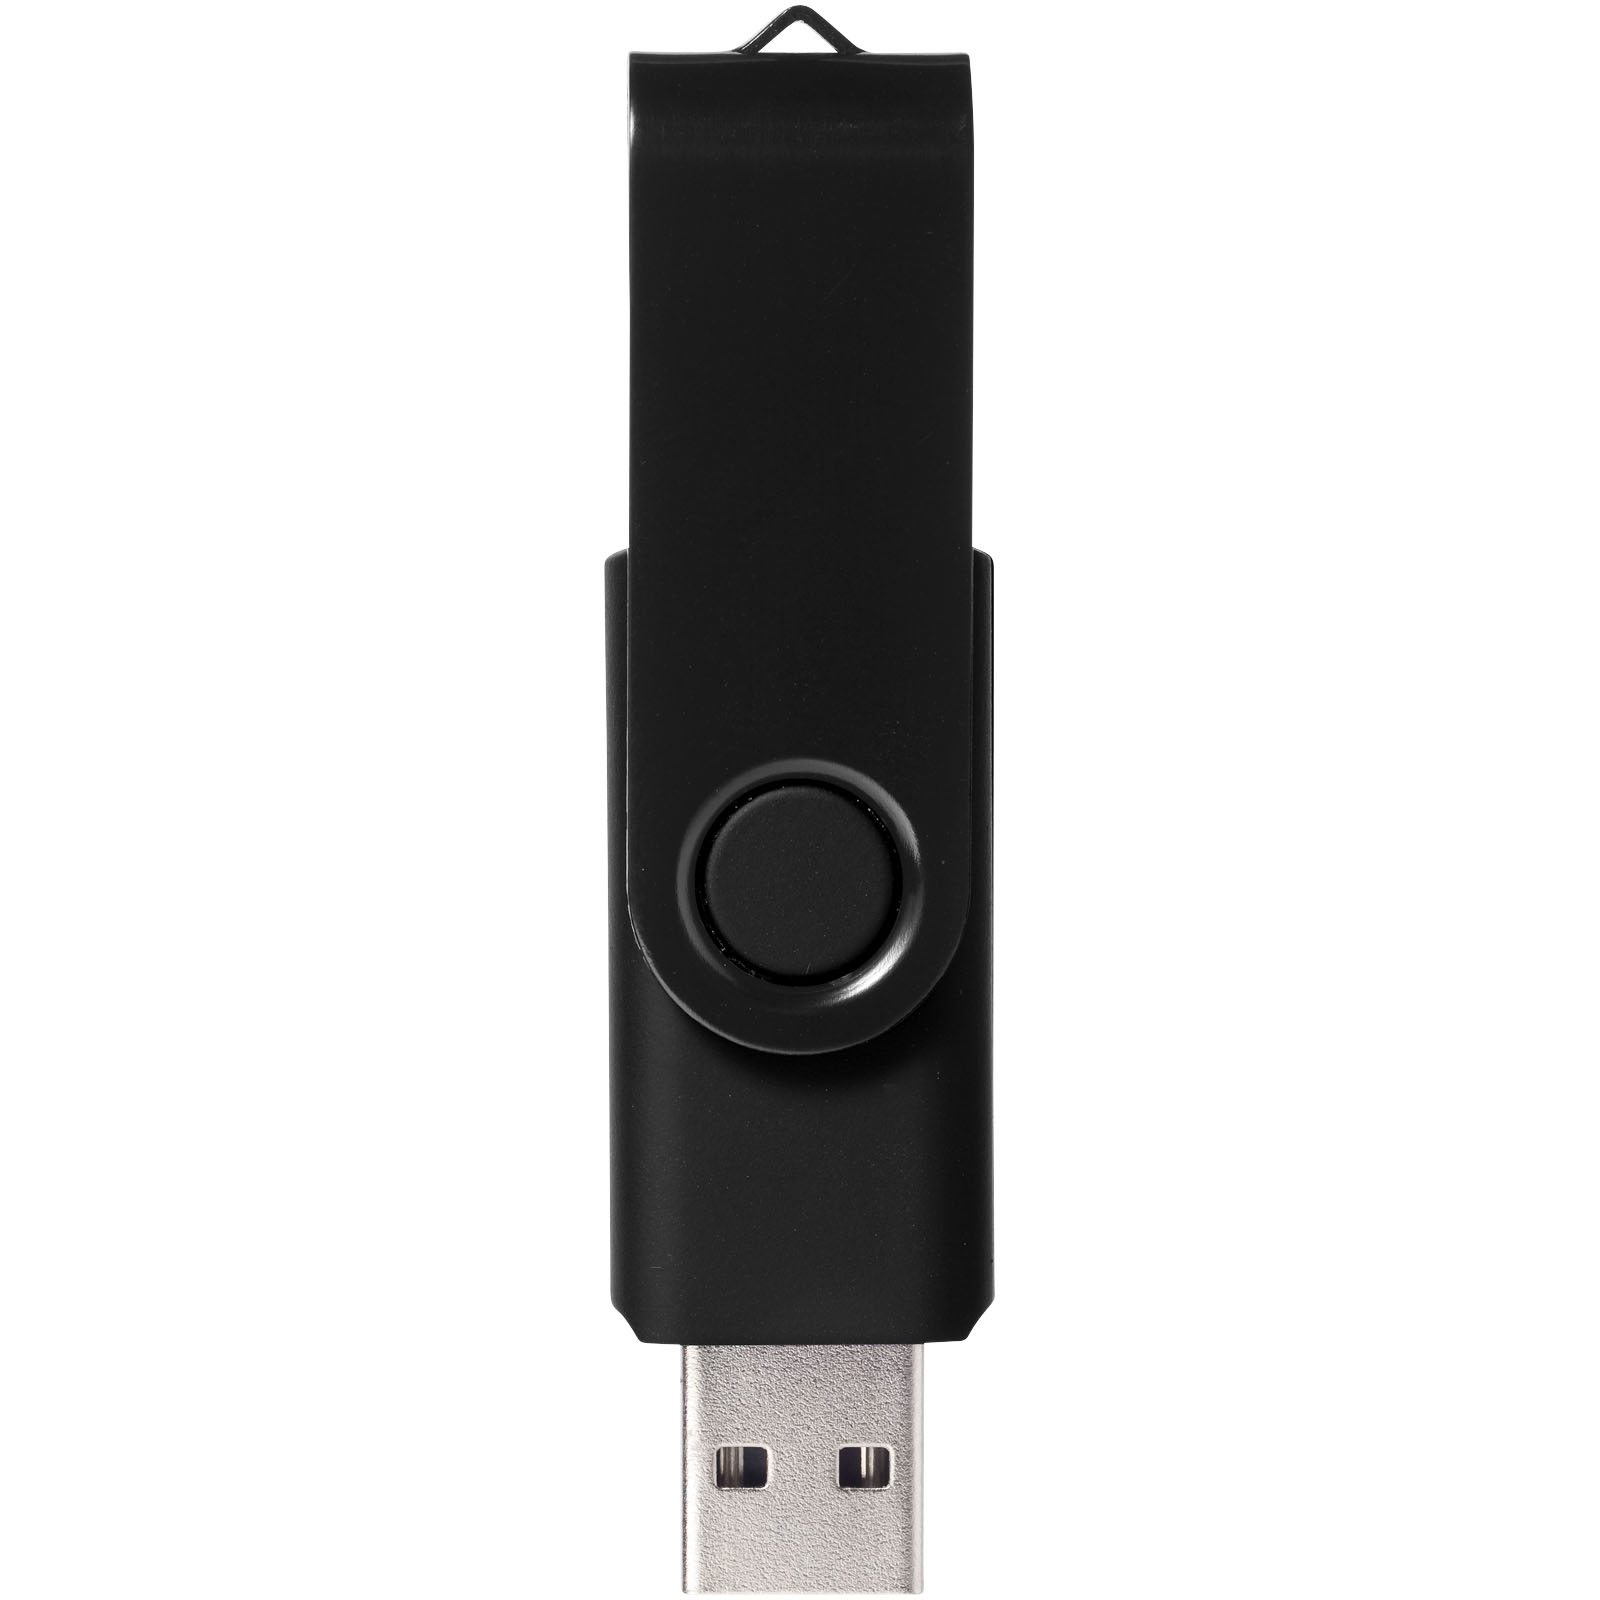 Clés USB publicitaires - Clé USB 4 Go Rotate-metallic - 2